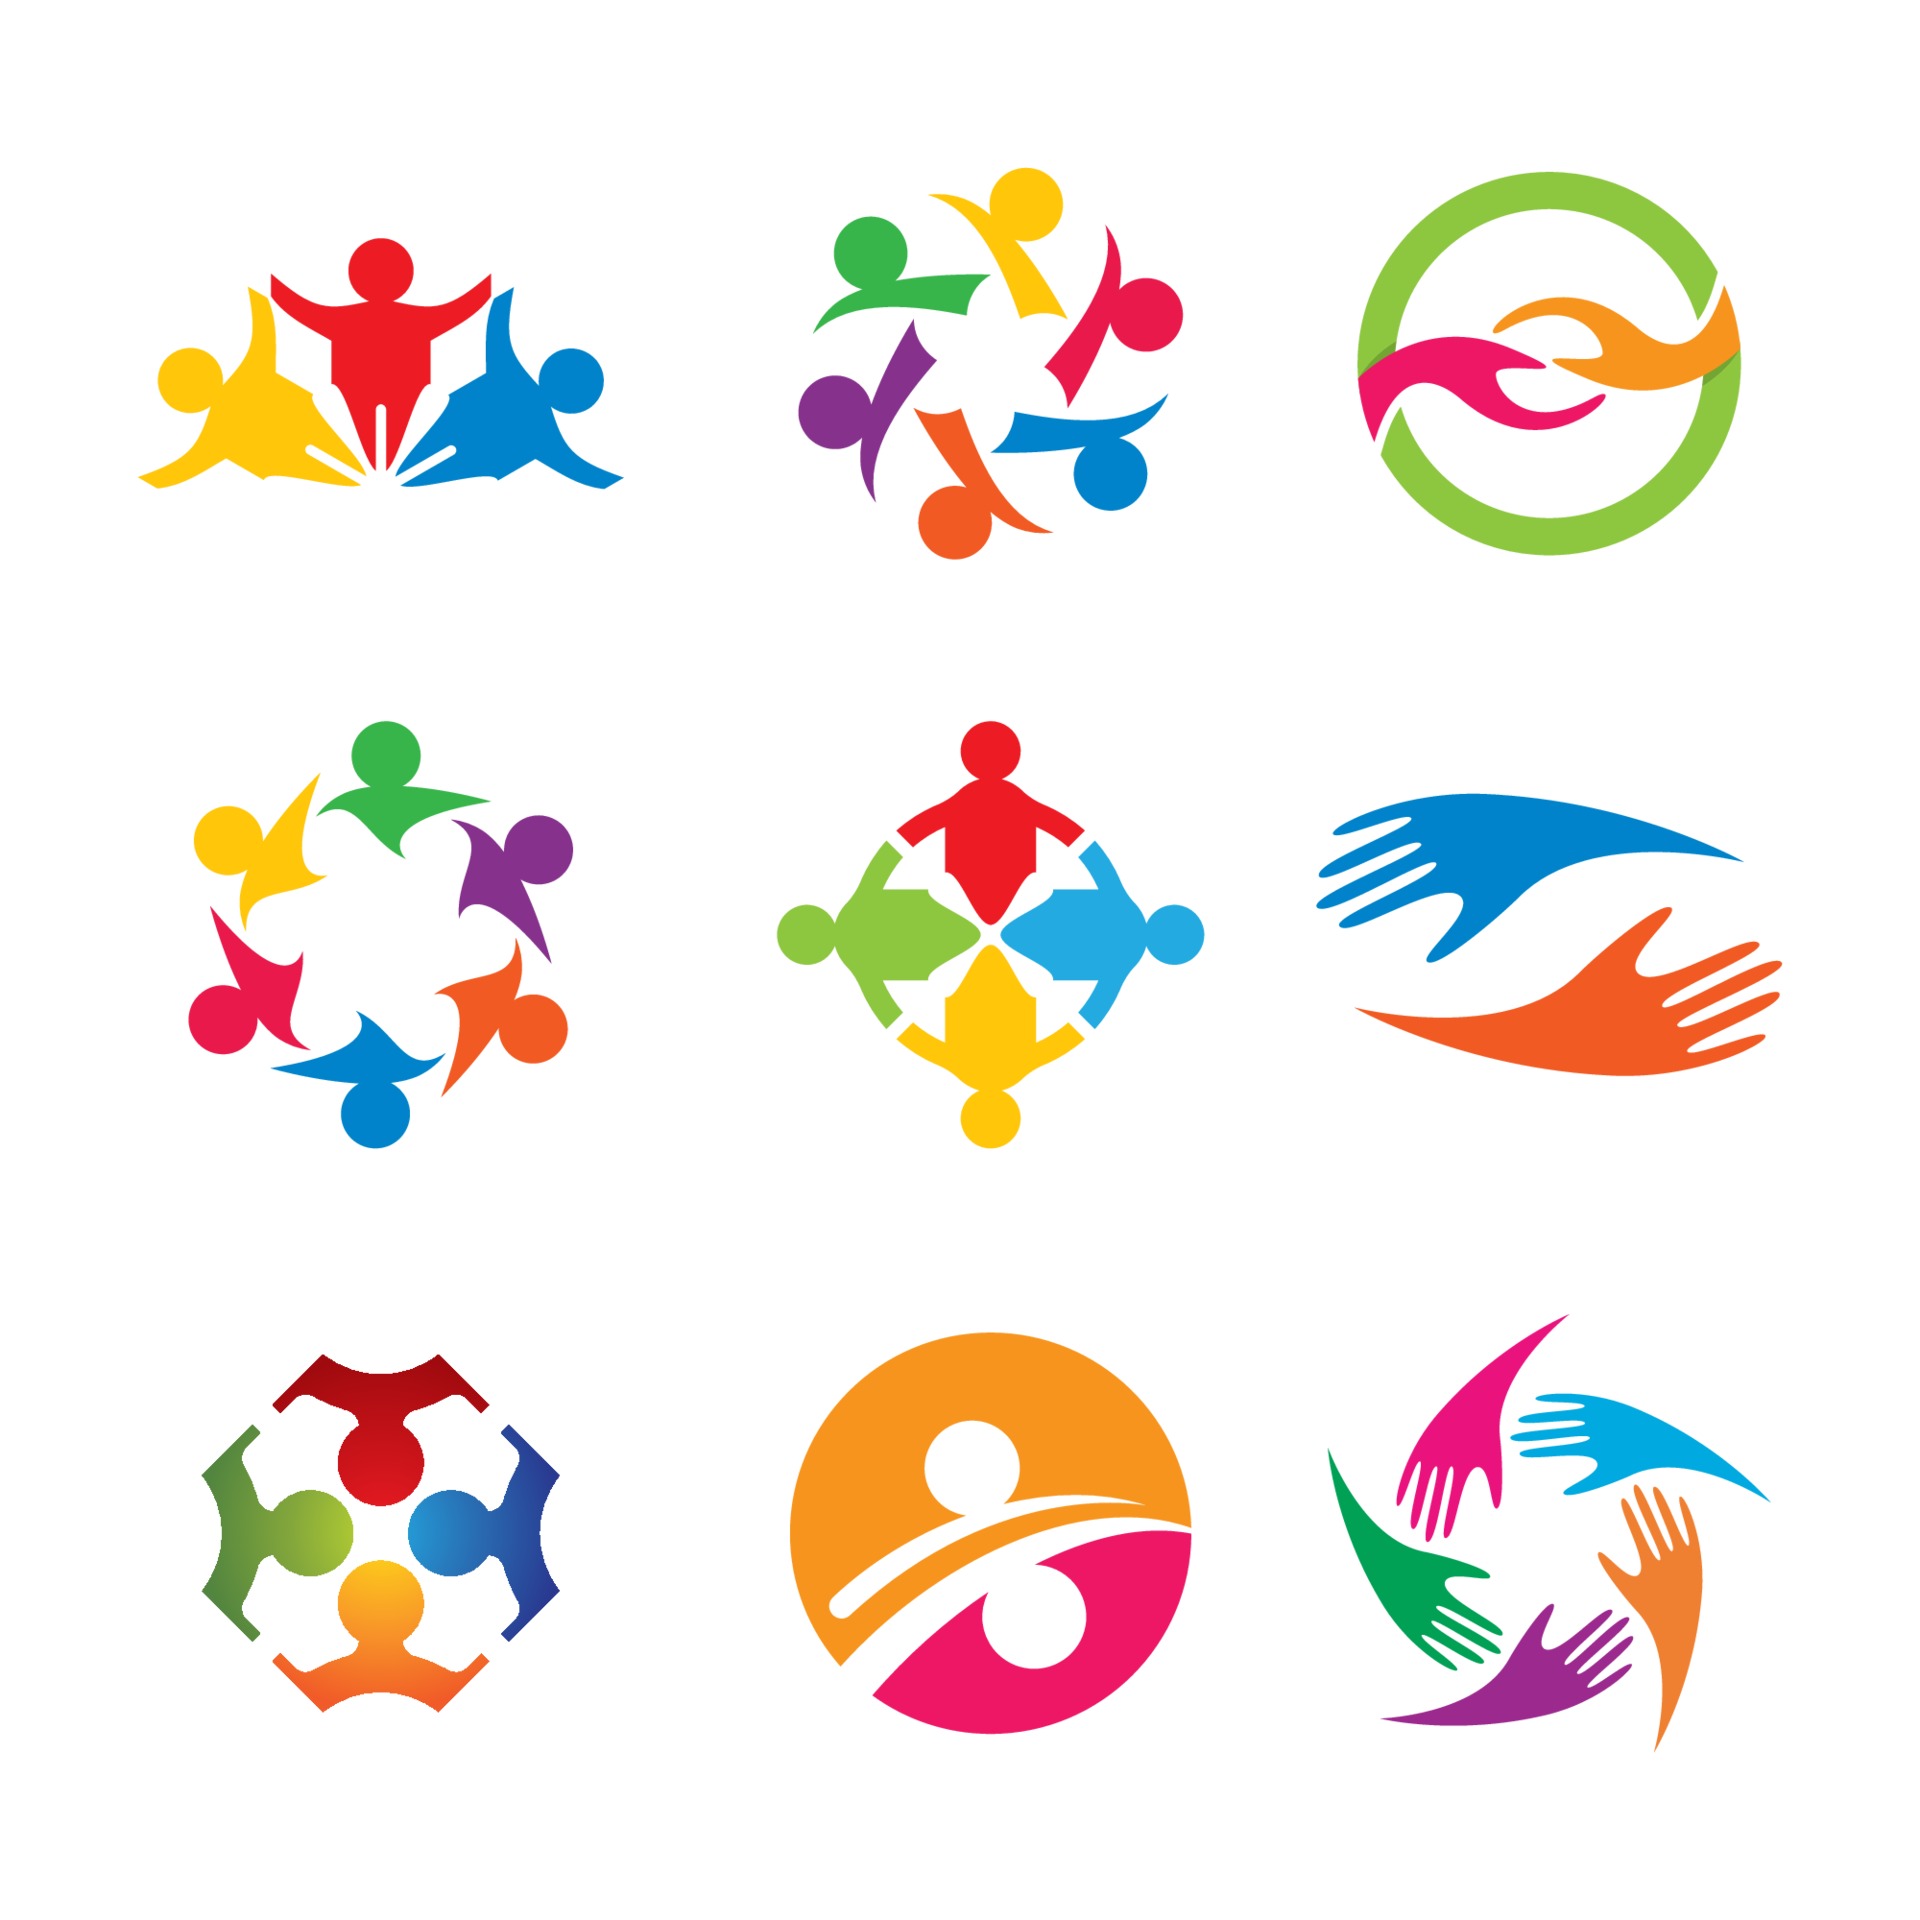 Community care logo images design 3273701 Vector Art at Vecteezy